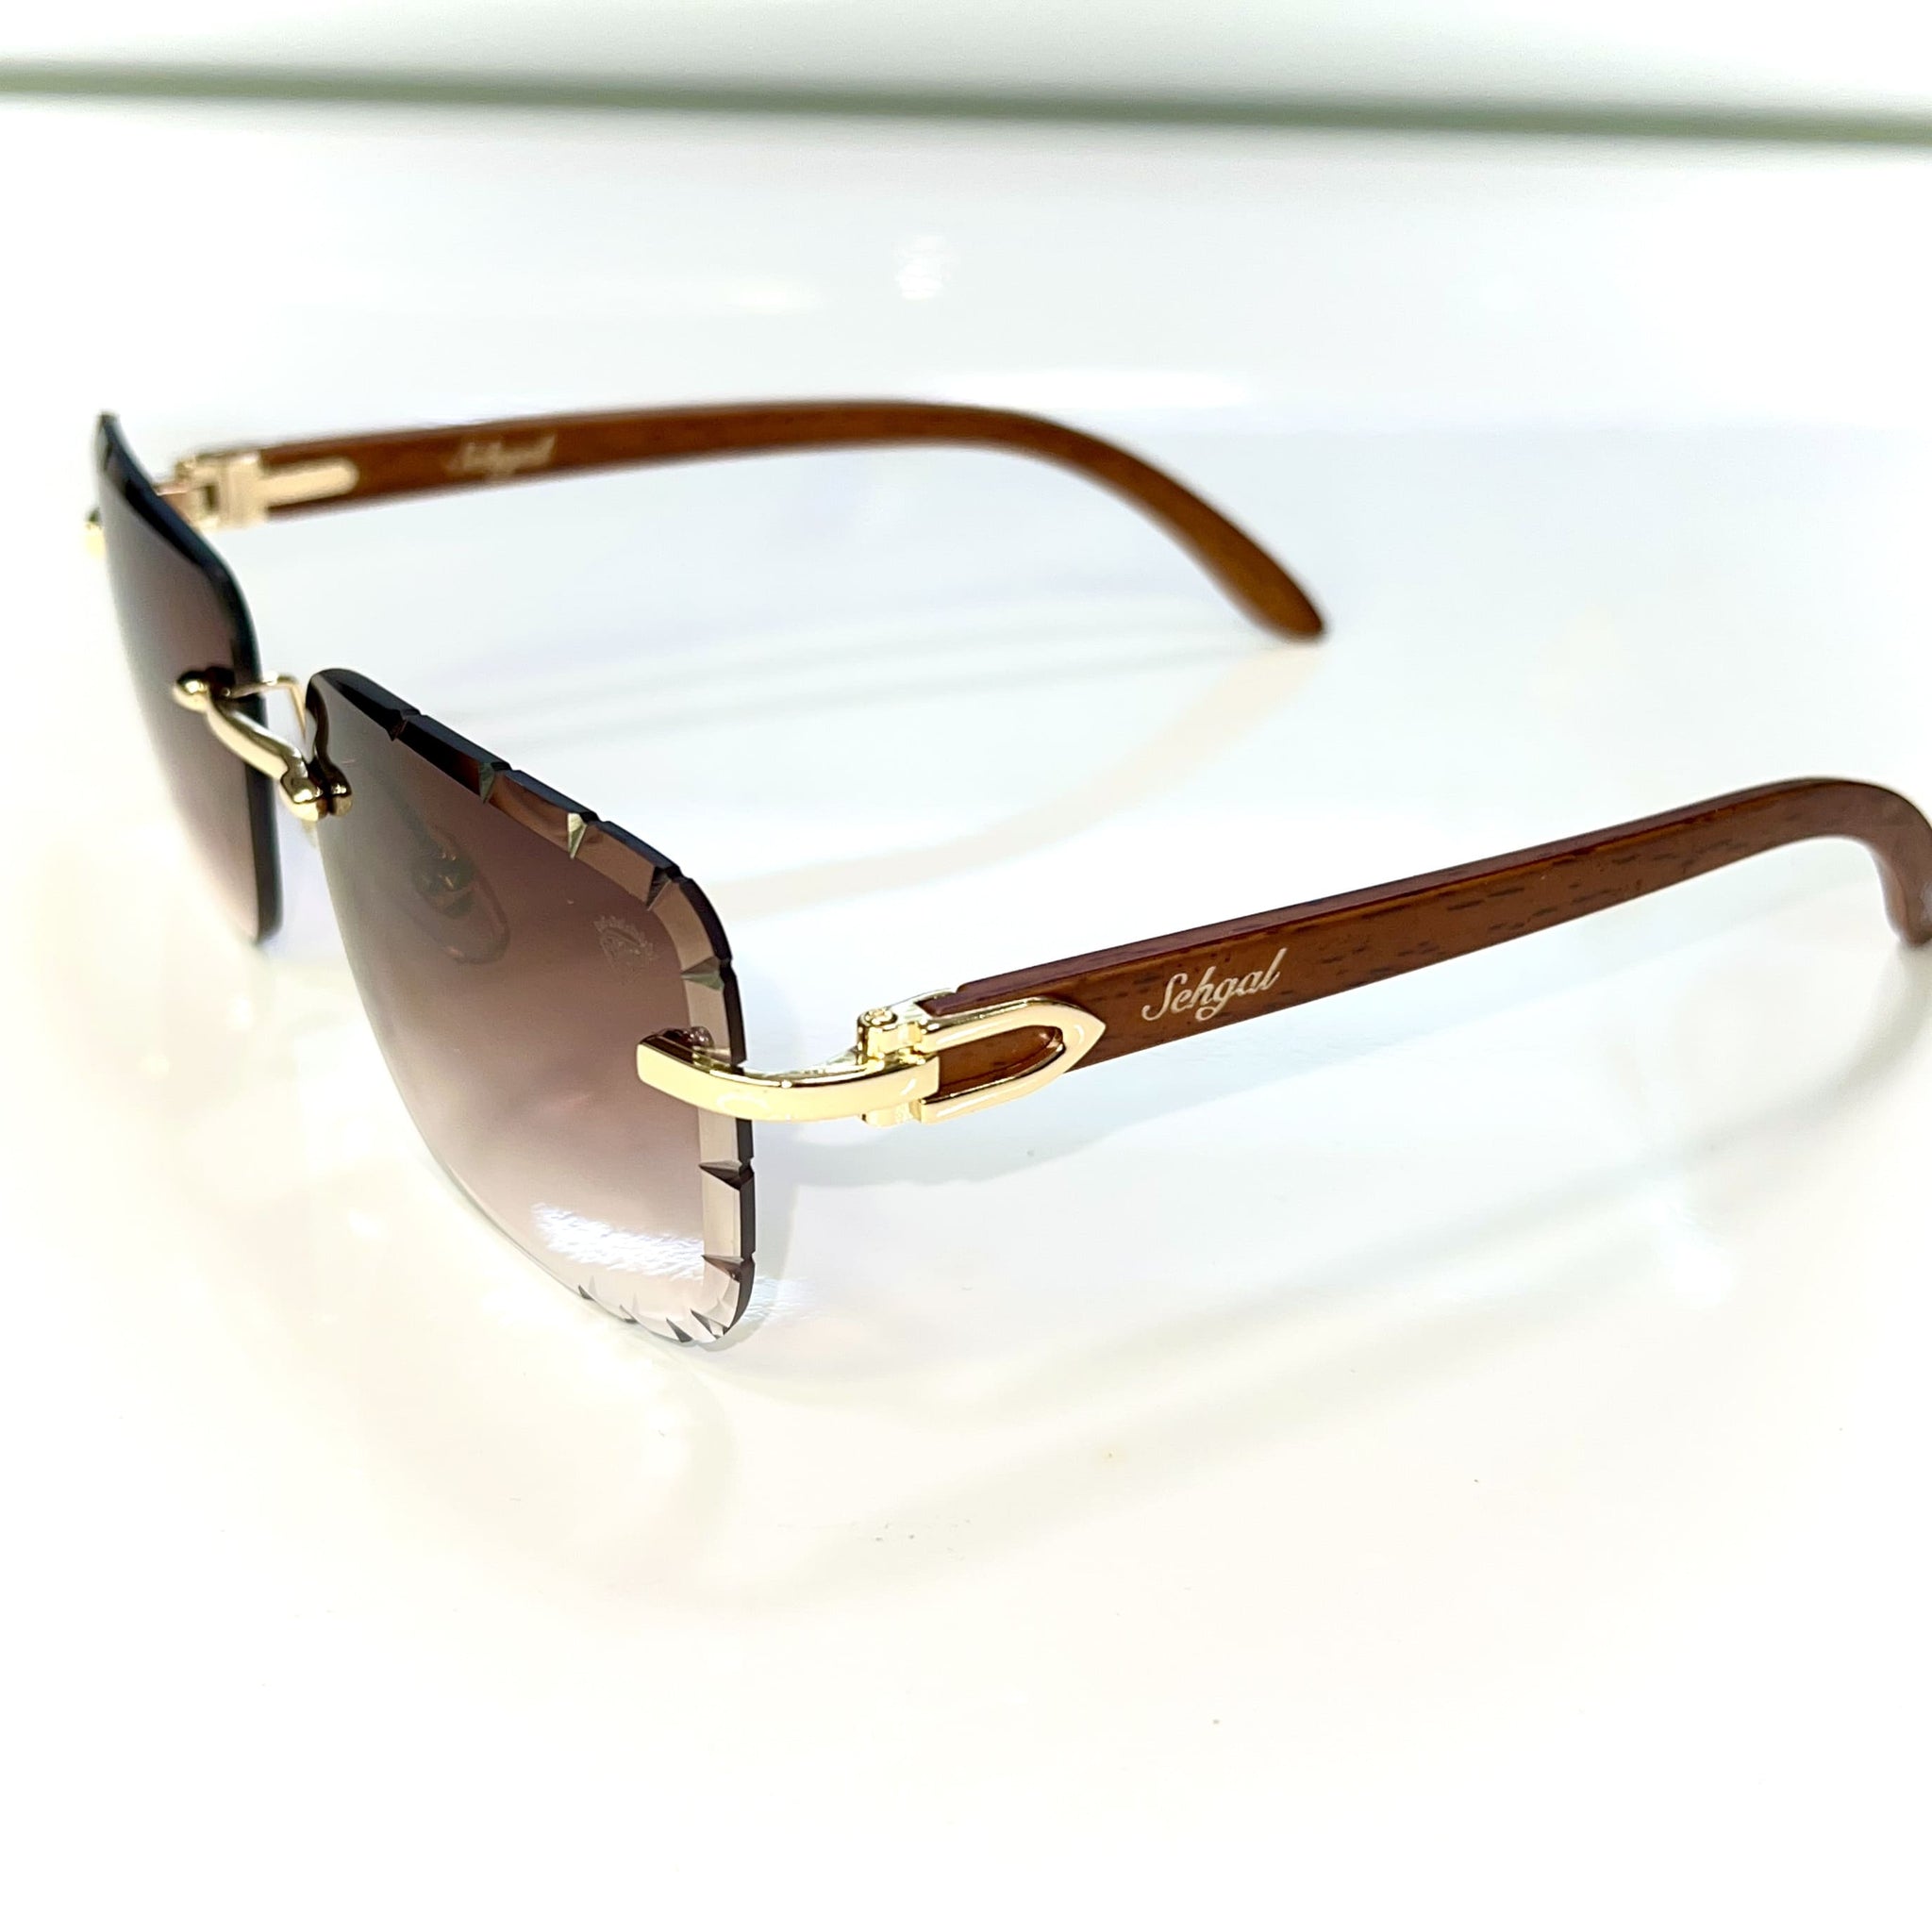 Woodcut 2.0 Glasses - Diamond cut / 14 carat gold plated / Woodgrain side - Brown Shade - Sehgal Glasses